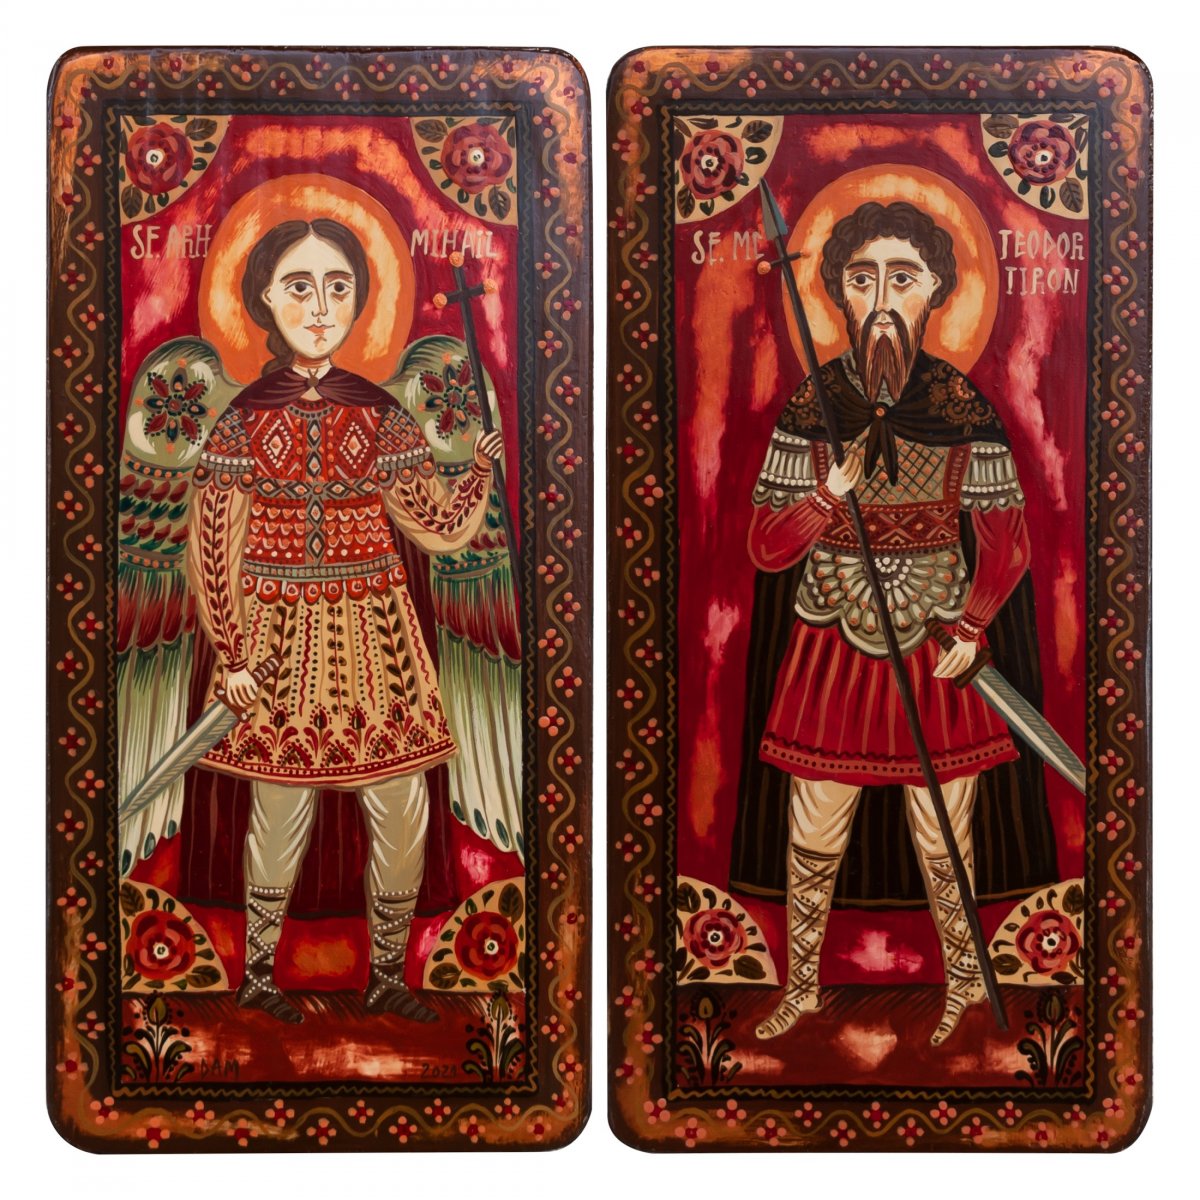 Icoană pe lemn tip diptic "Sf. Arh. Mihail și Sf. Mc Teodor Tiron", 2 x 10x20cm